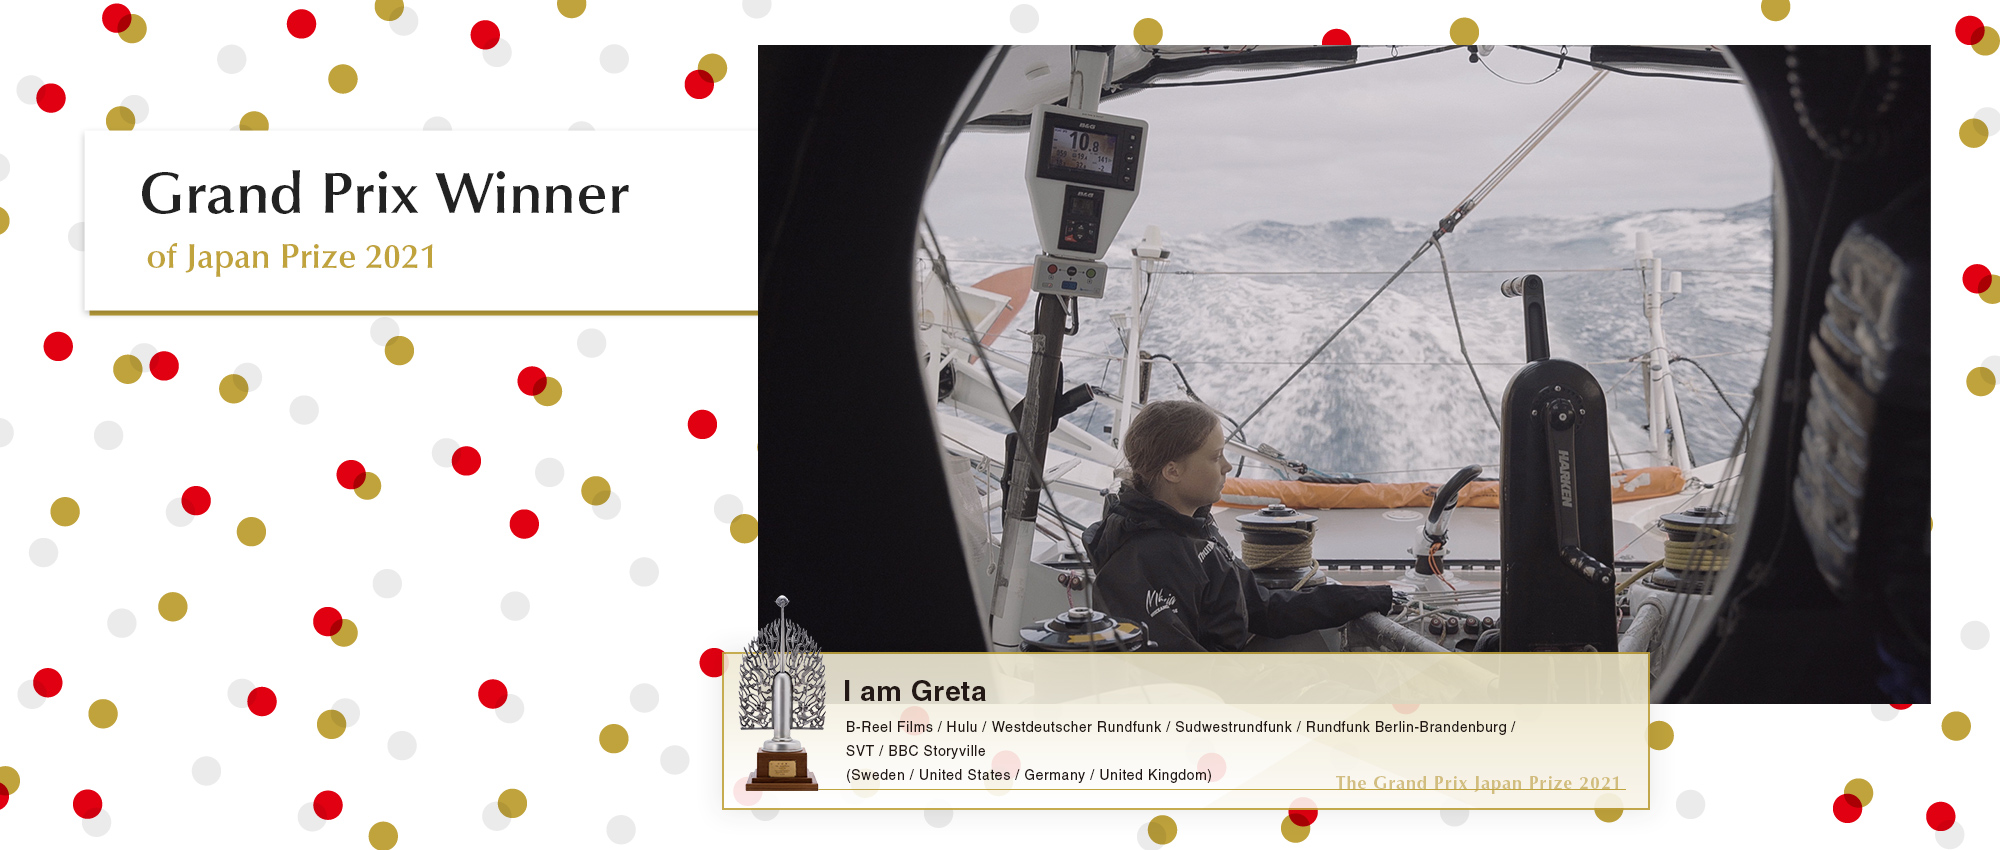 Grand Prix Winner of Japan Prize 2021 “I am Greta”